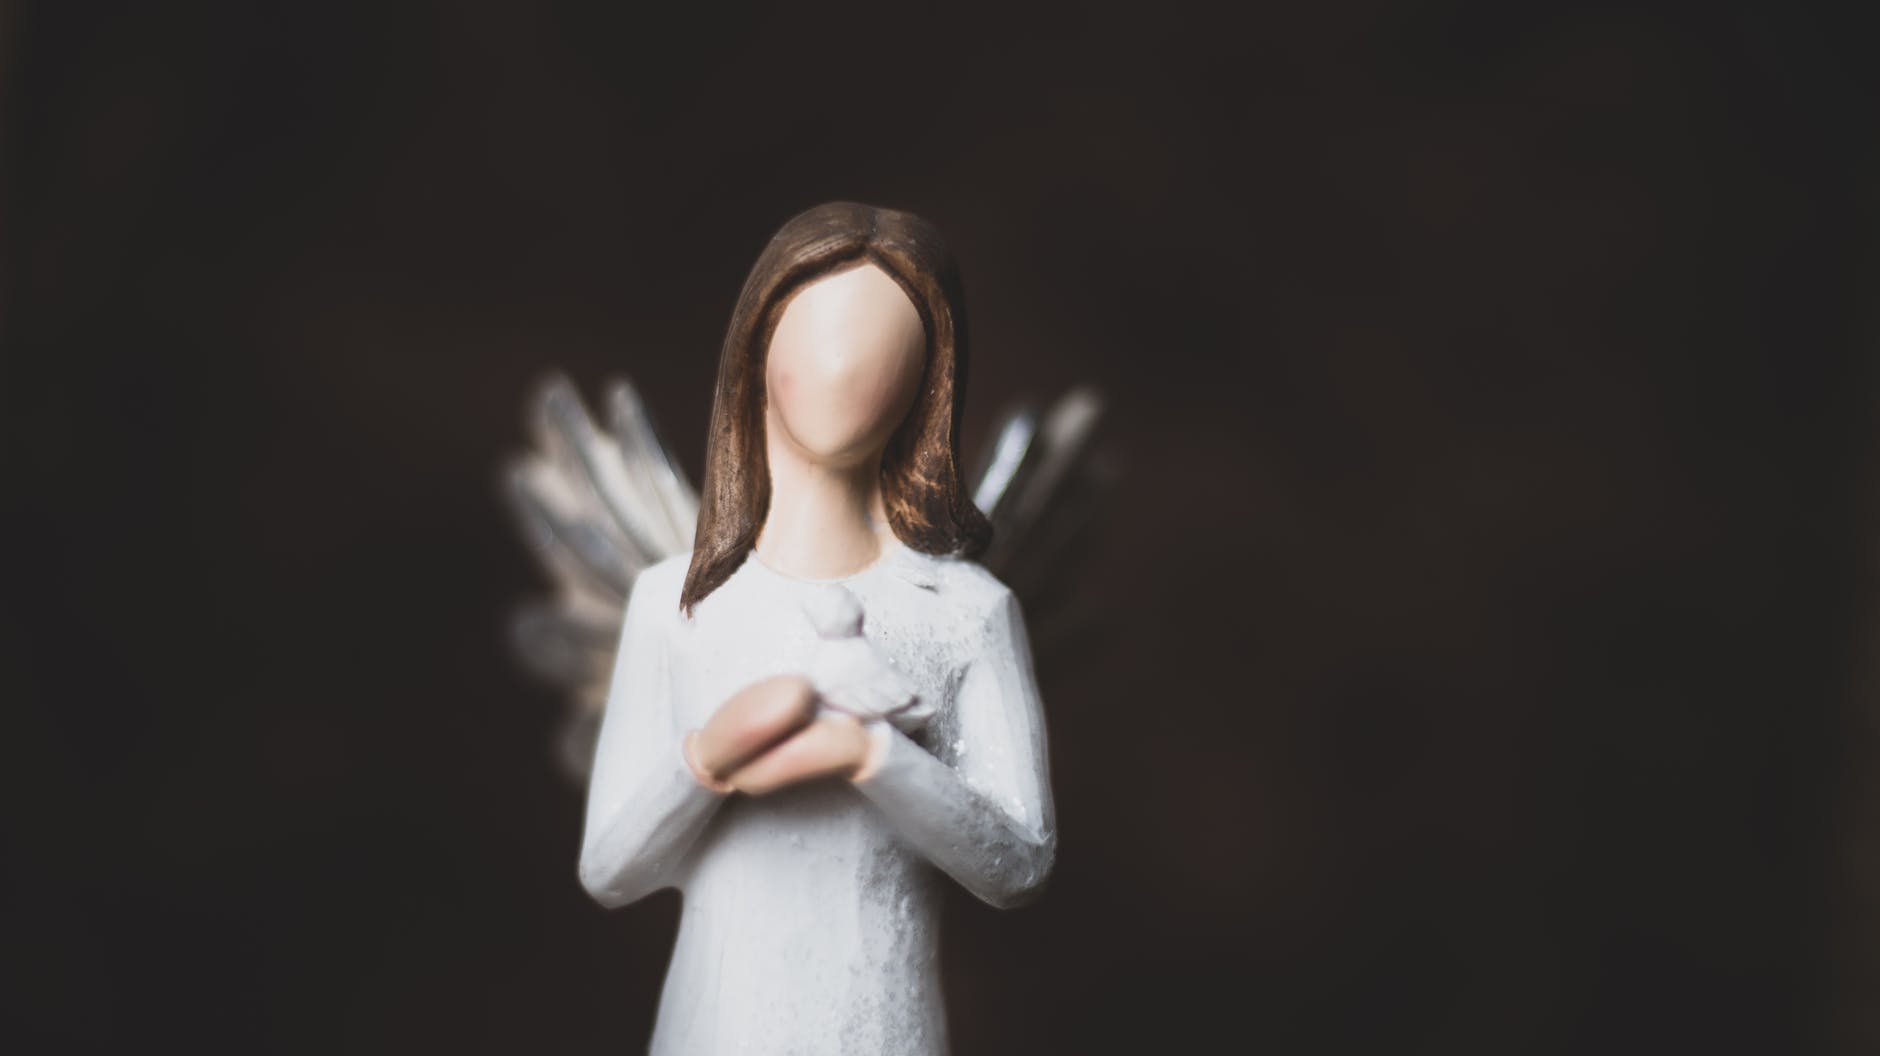 She saw an angel figurine. | Source: Pexels